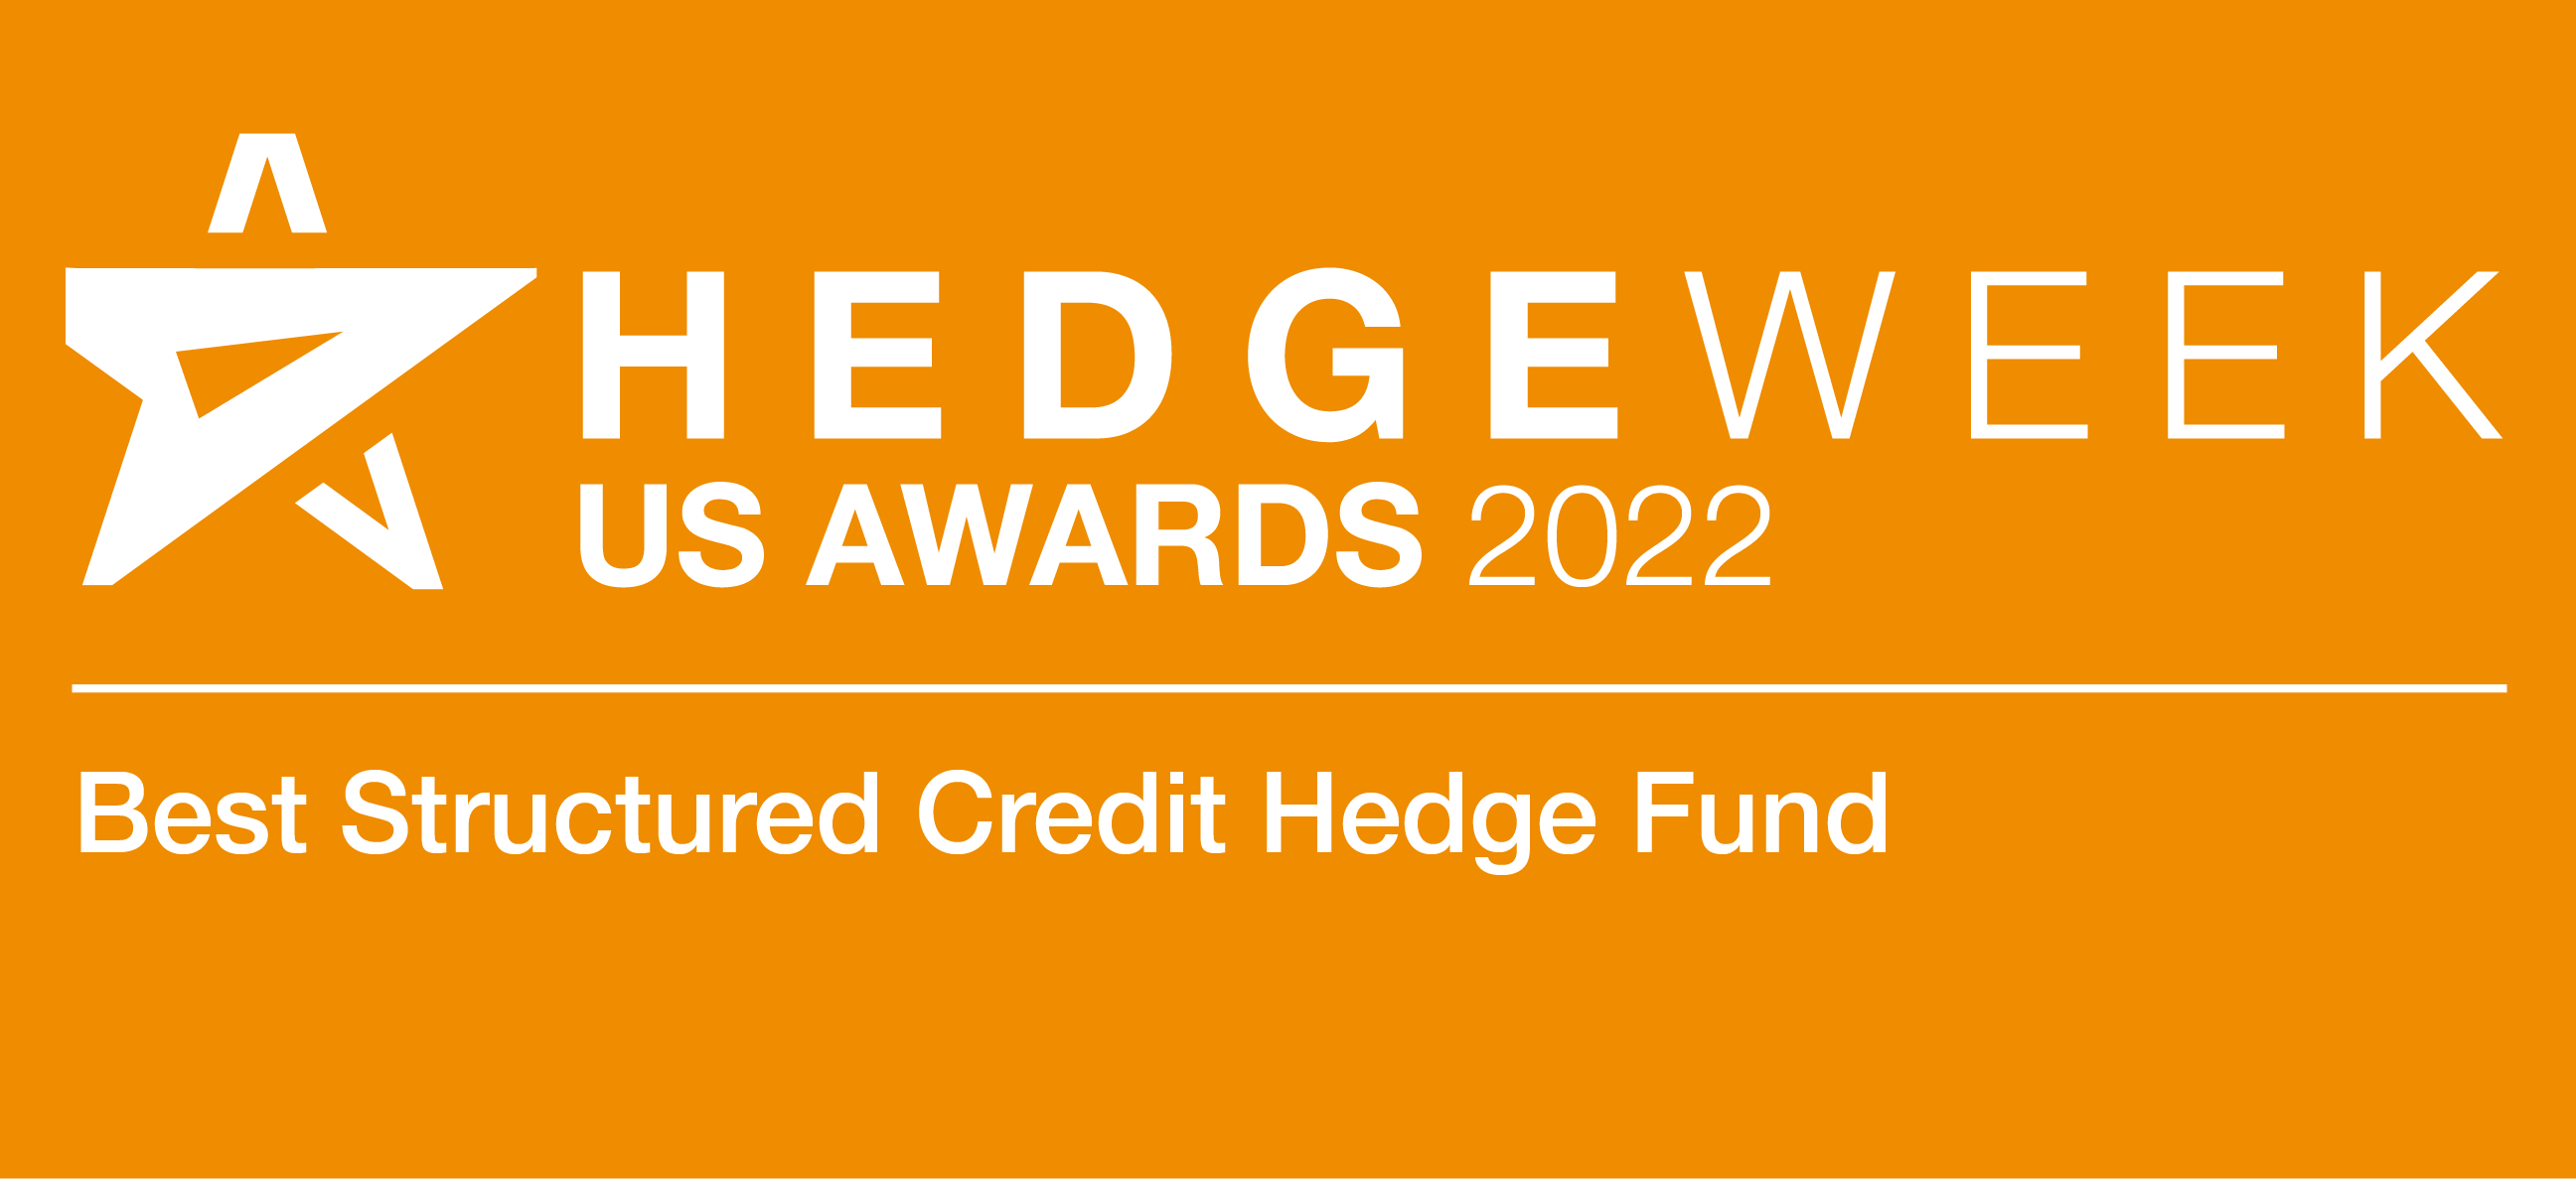 Hedgeweek US Awards 2022 - Best Structured Credit Hedge Fund